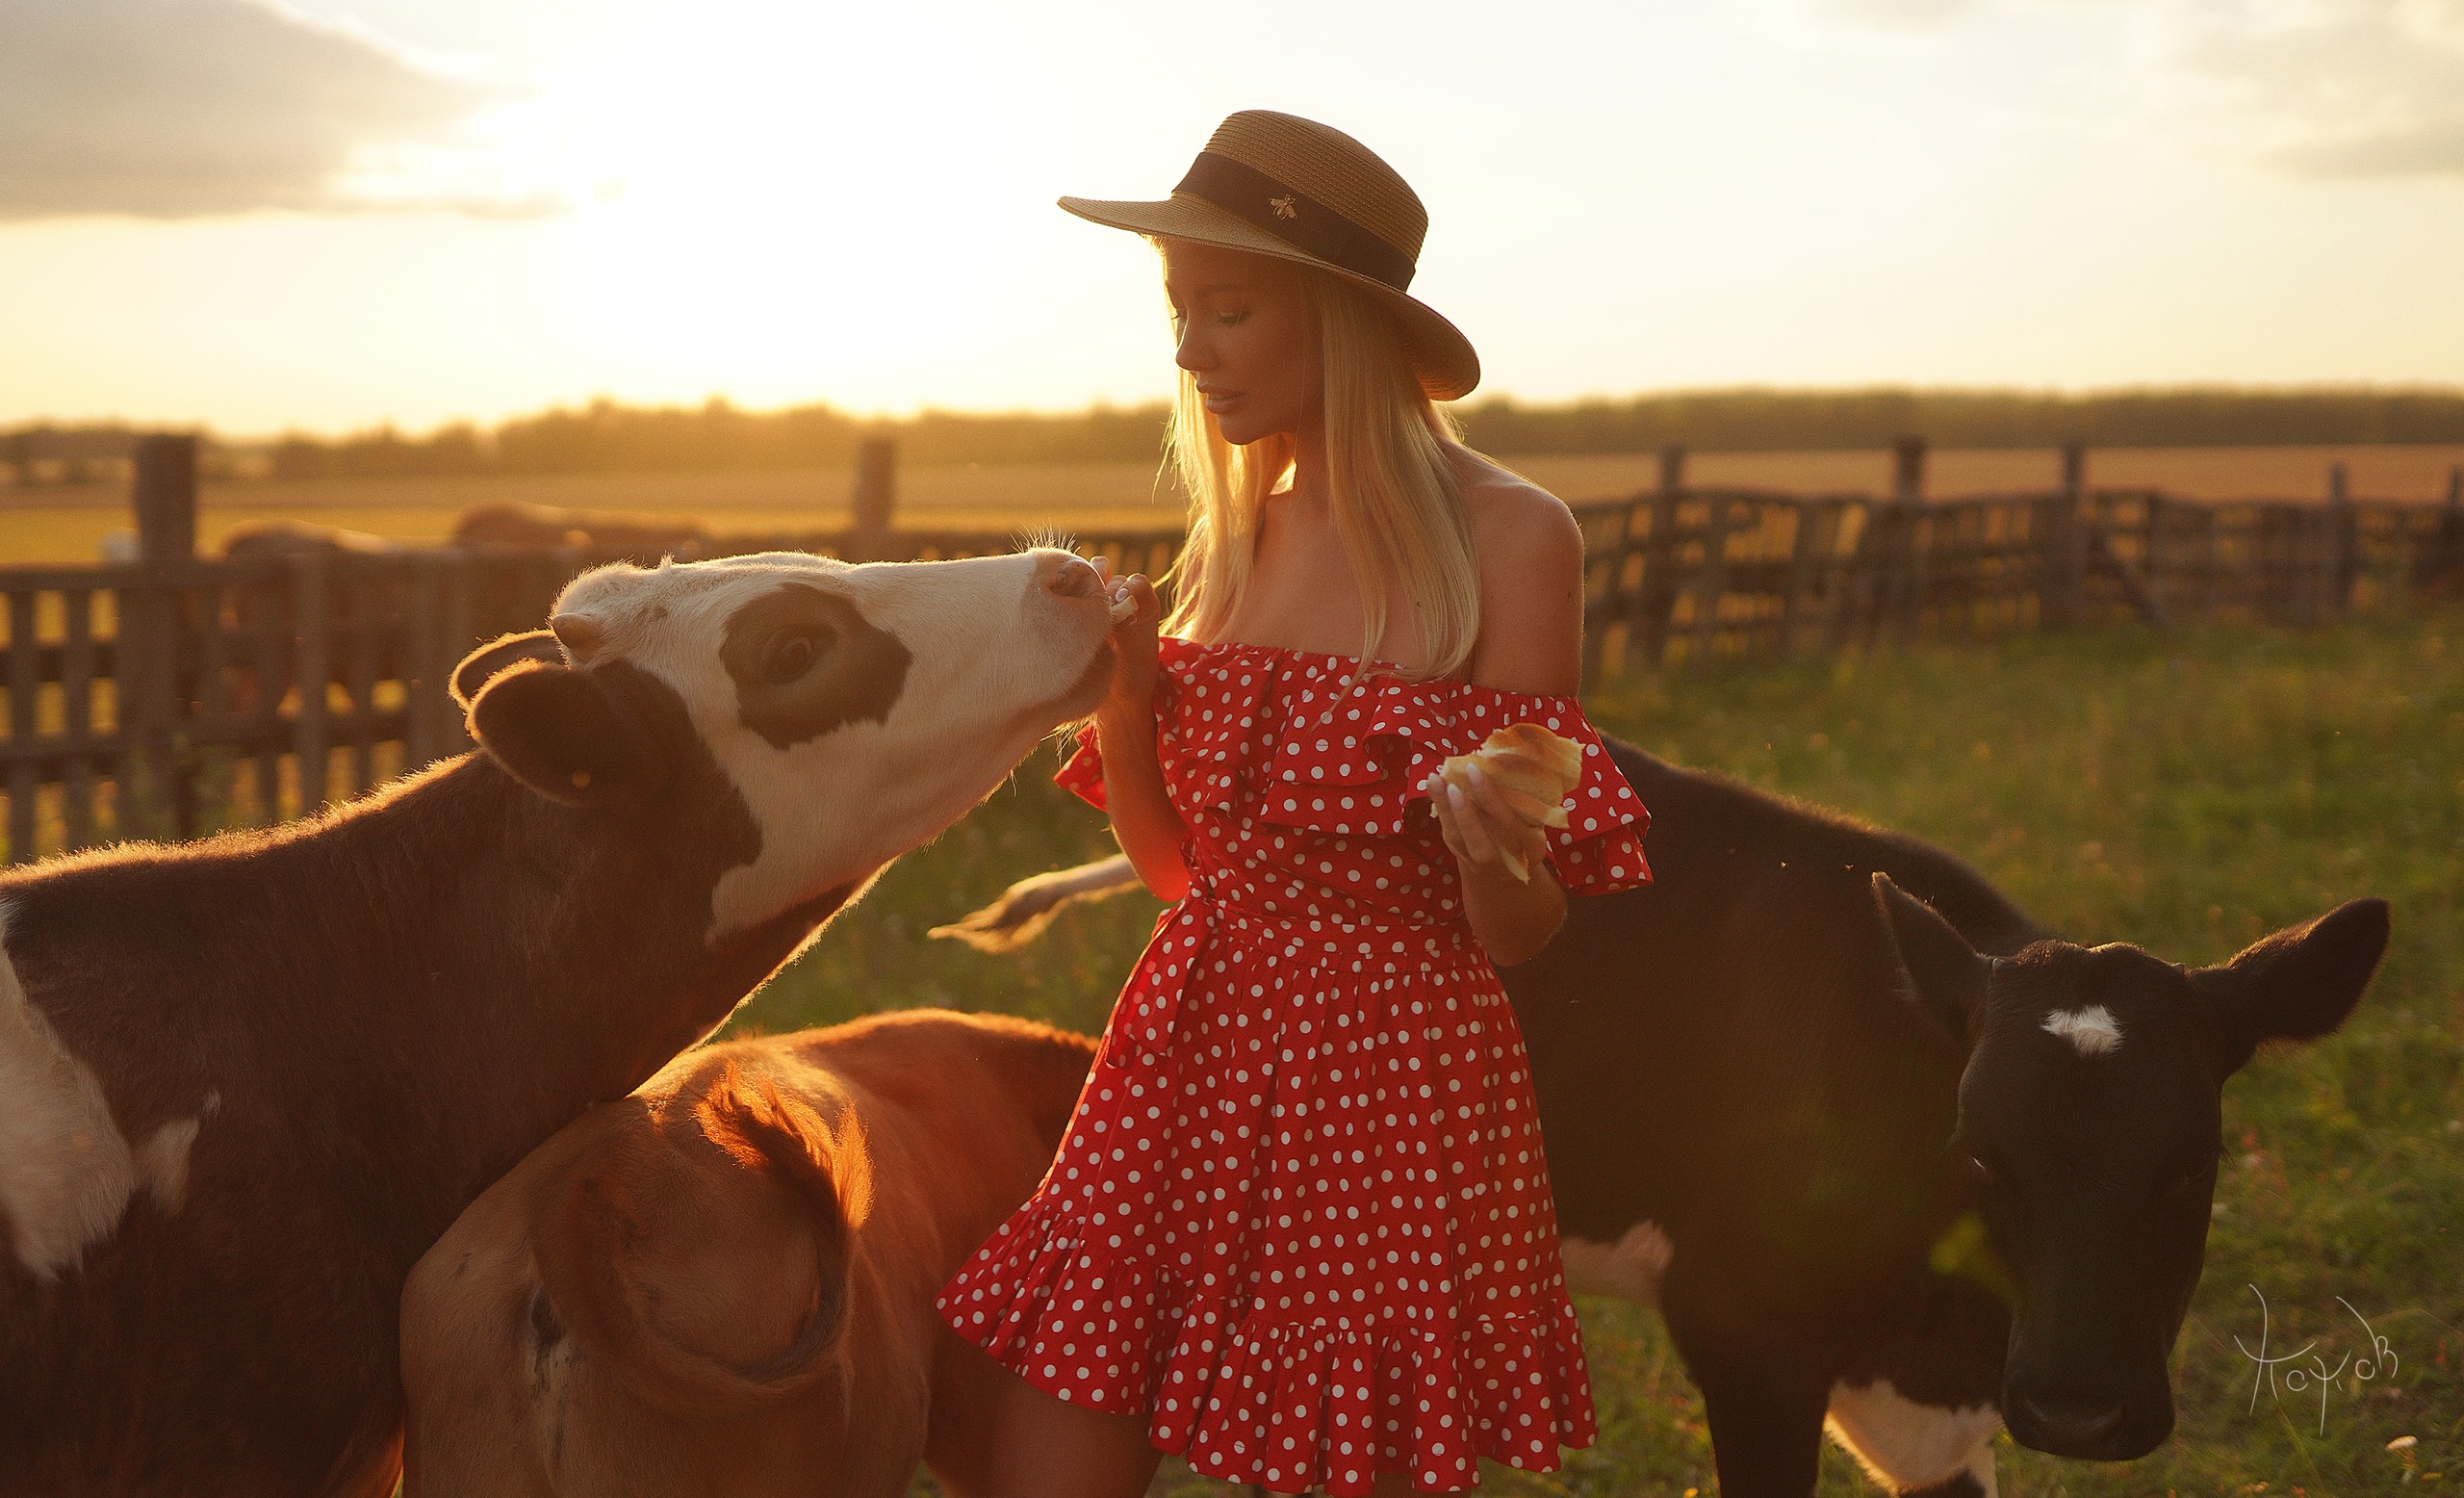 People 2560x1556 women Andrey Popov blonde women outdoors hat animals cow bare shoulders red dress polka dots summer dress dress Maria Avtakhova